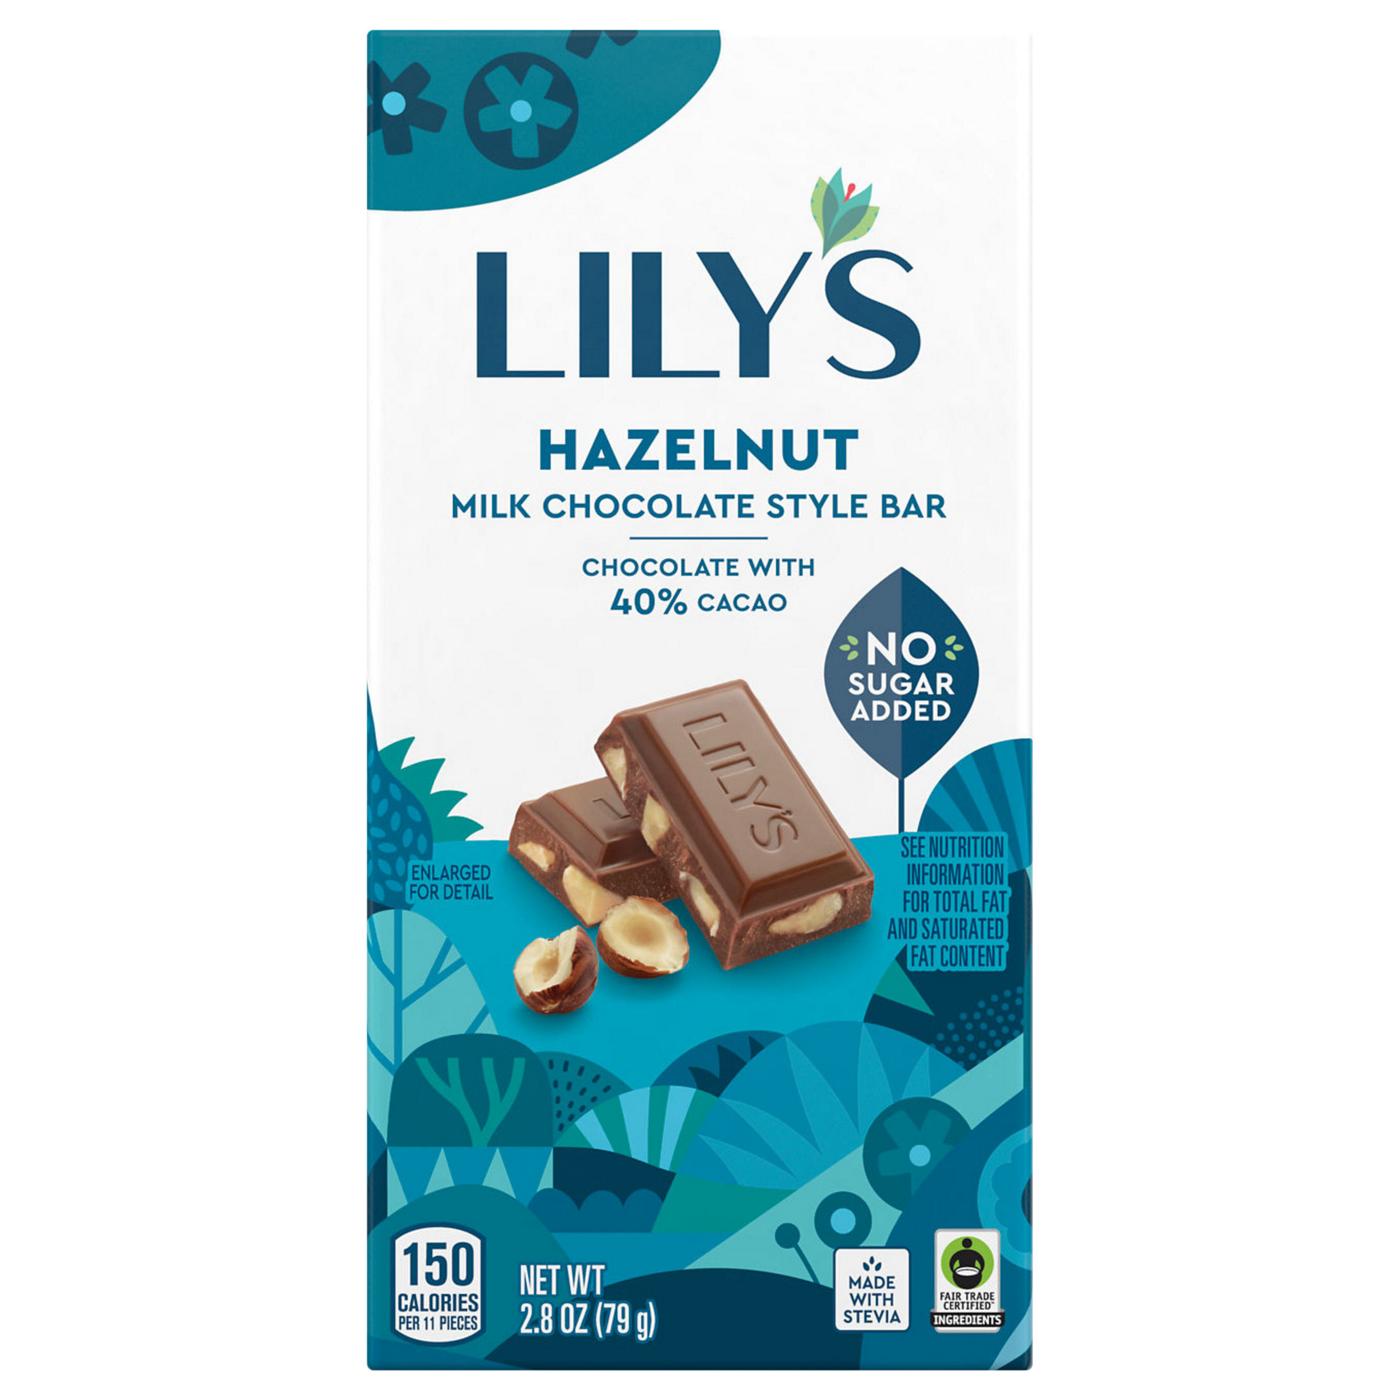 Lily's Hazelnut Milk Chocolate Style Bar; image 1 of 3